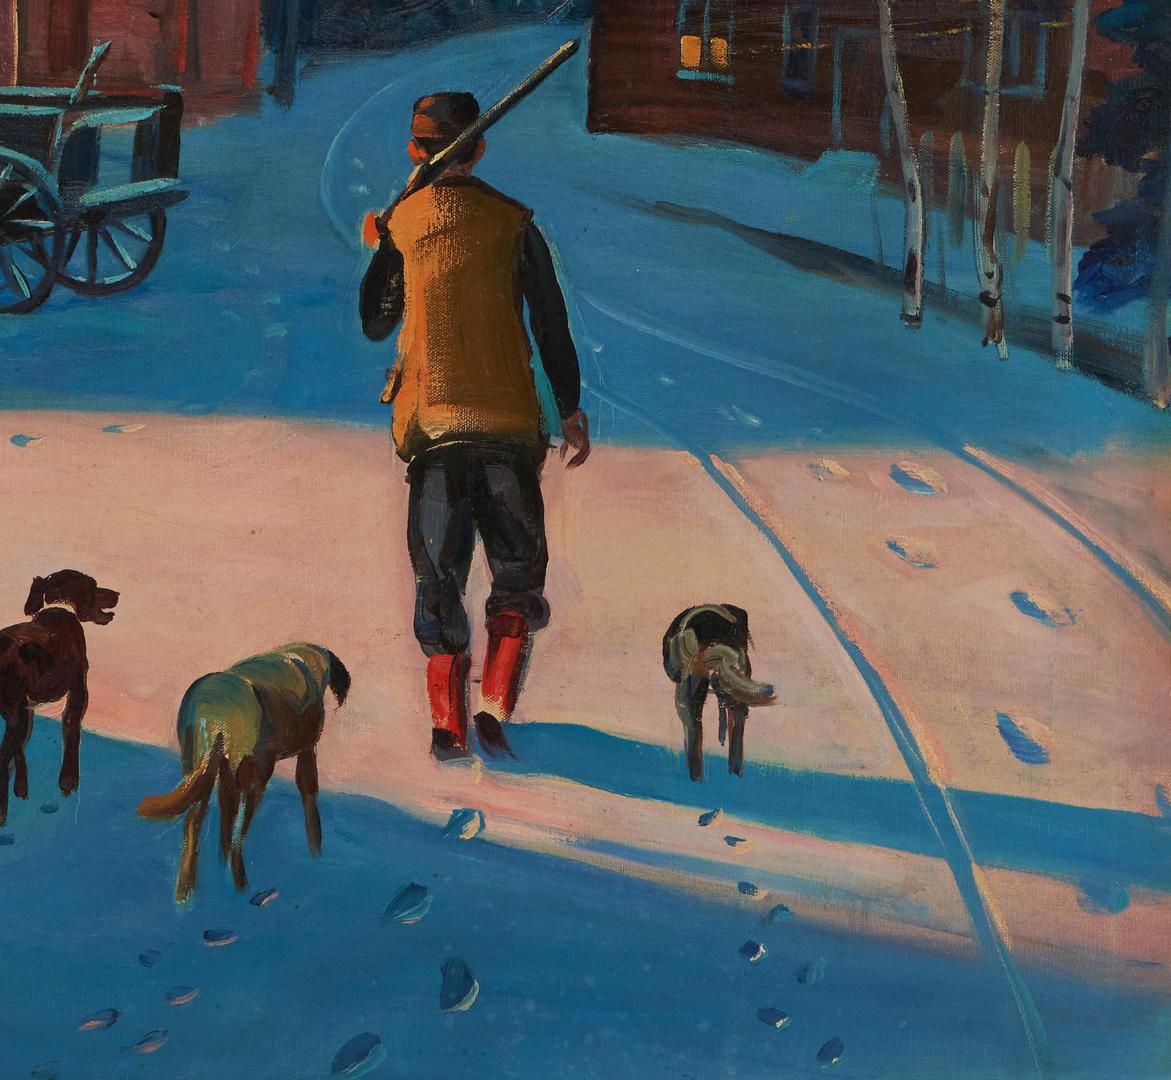 Lot 481: Harold Betts O/C Winter Scene, Hunter and Dogs Illustration